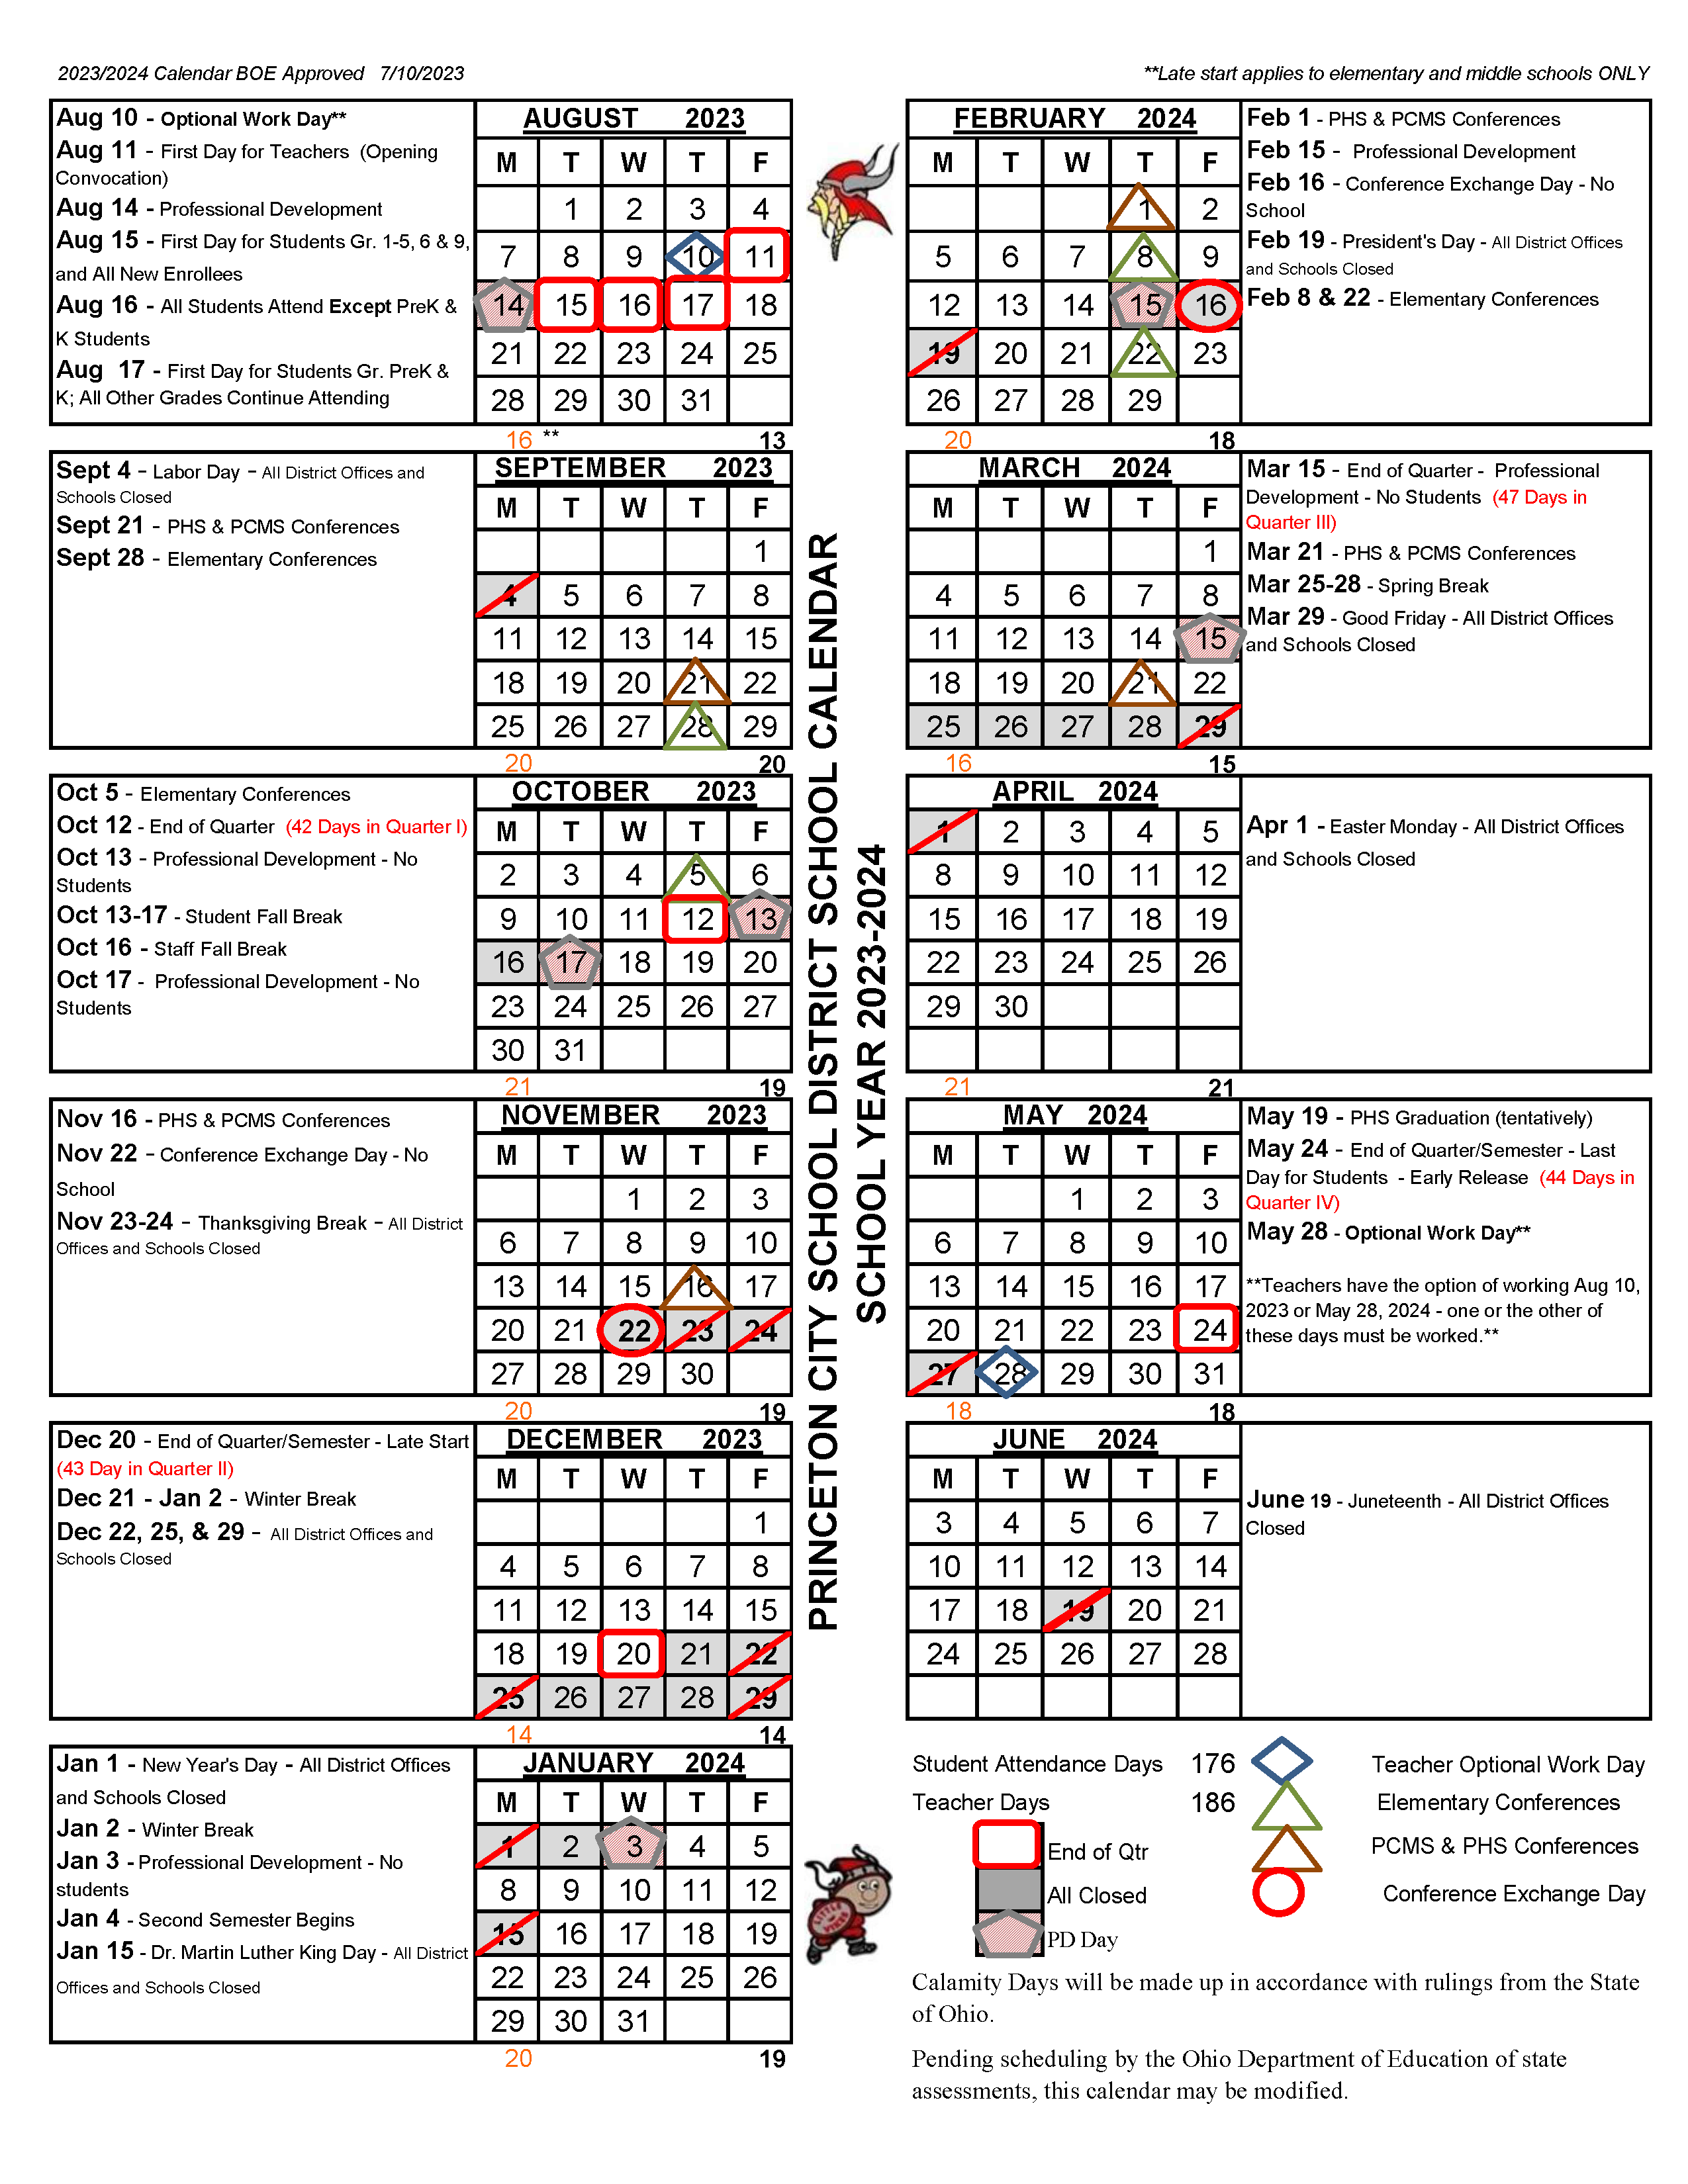 Digital image of the school year calendar